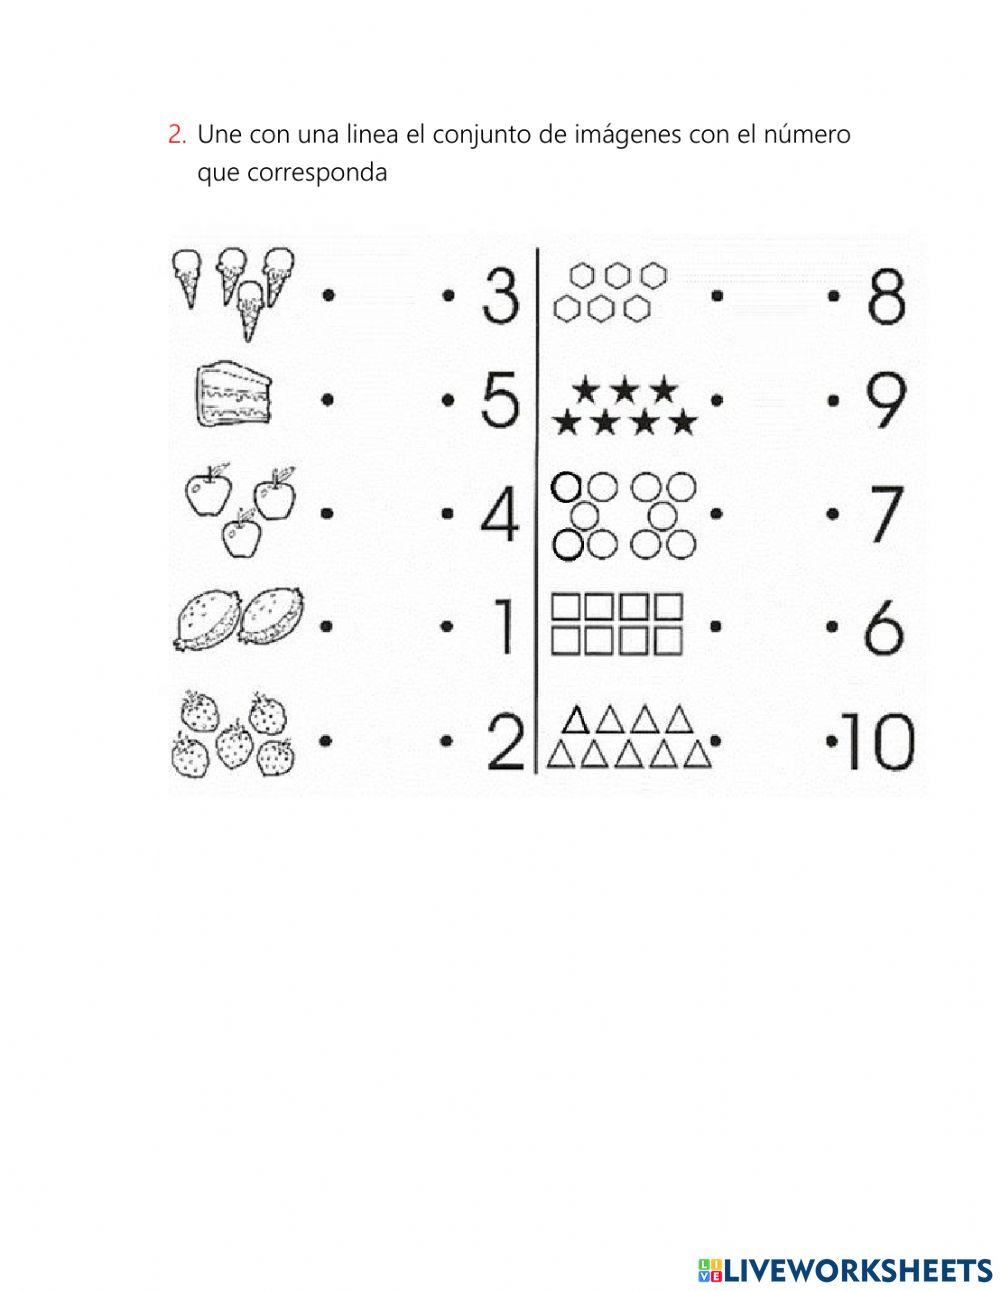 Figuras geométricas y números